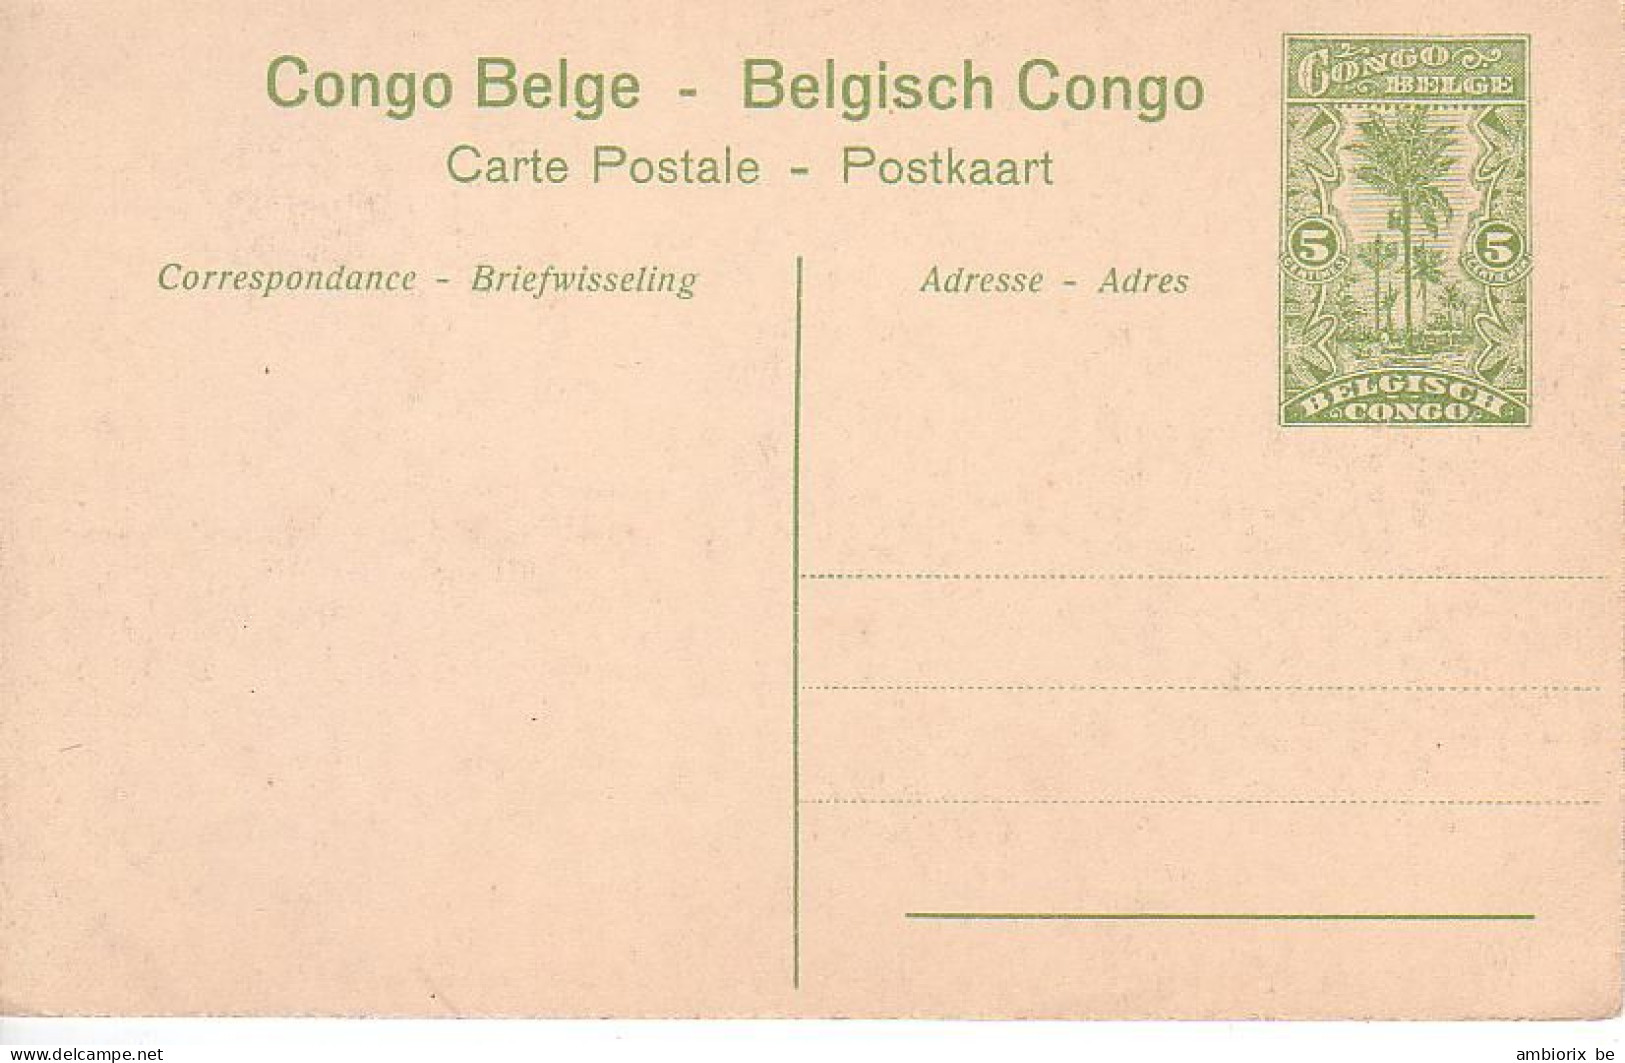 Etier Postal Congo Neuf N° 42 - 70 - Kisantu - Récolte Du Riz - Interi Postali